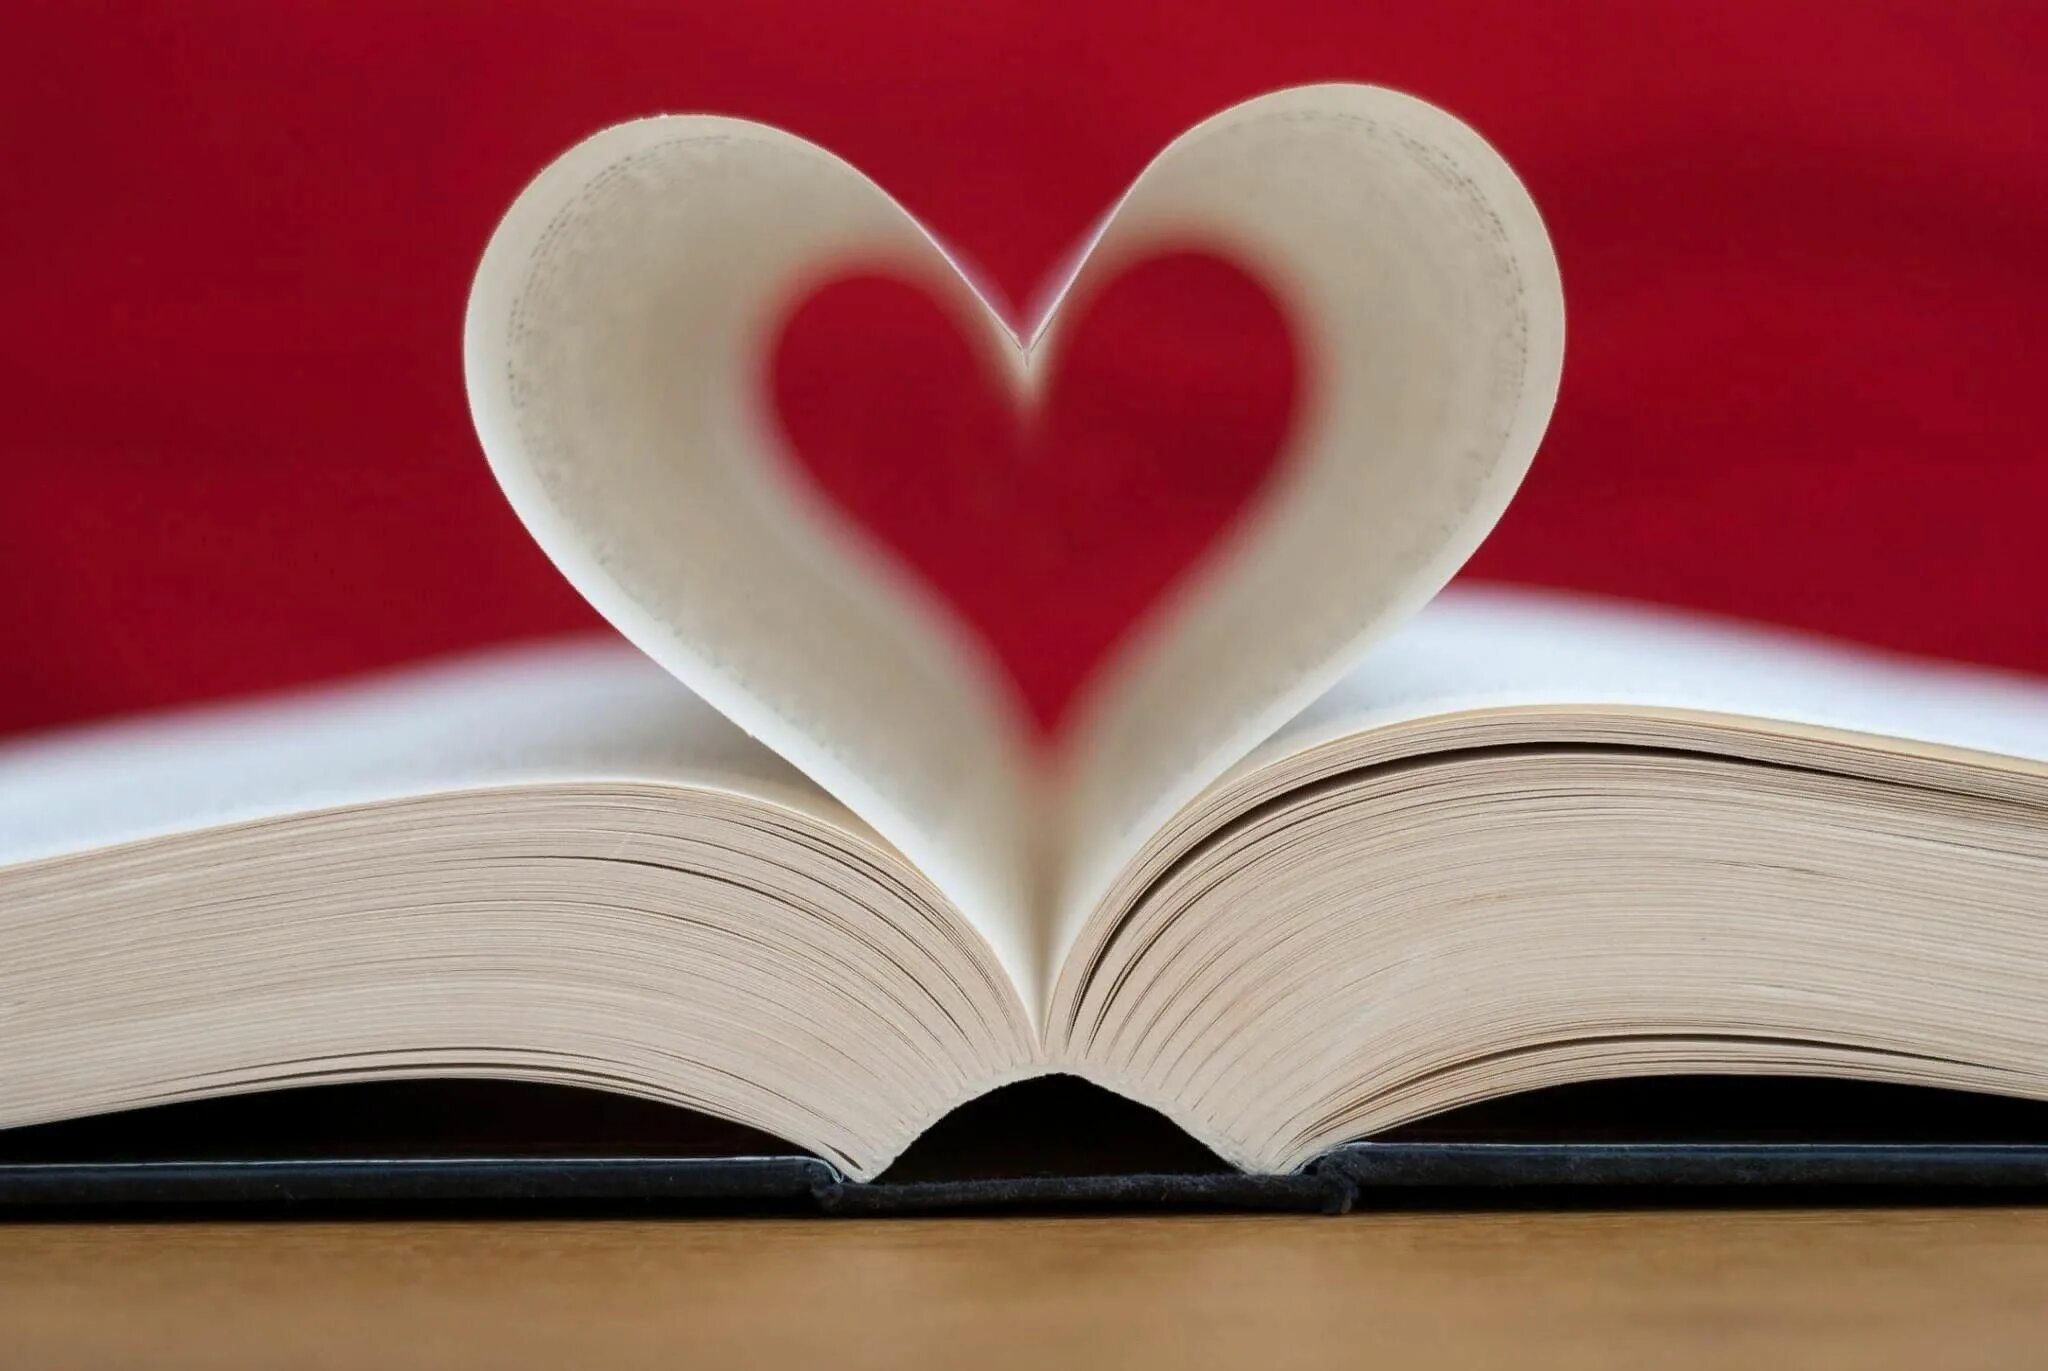 Сердечко из книг. Книга о любви. Книга сердце. Сердце из книг в библиотеке.